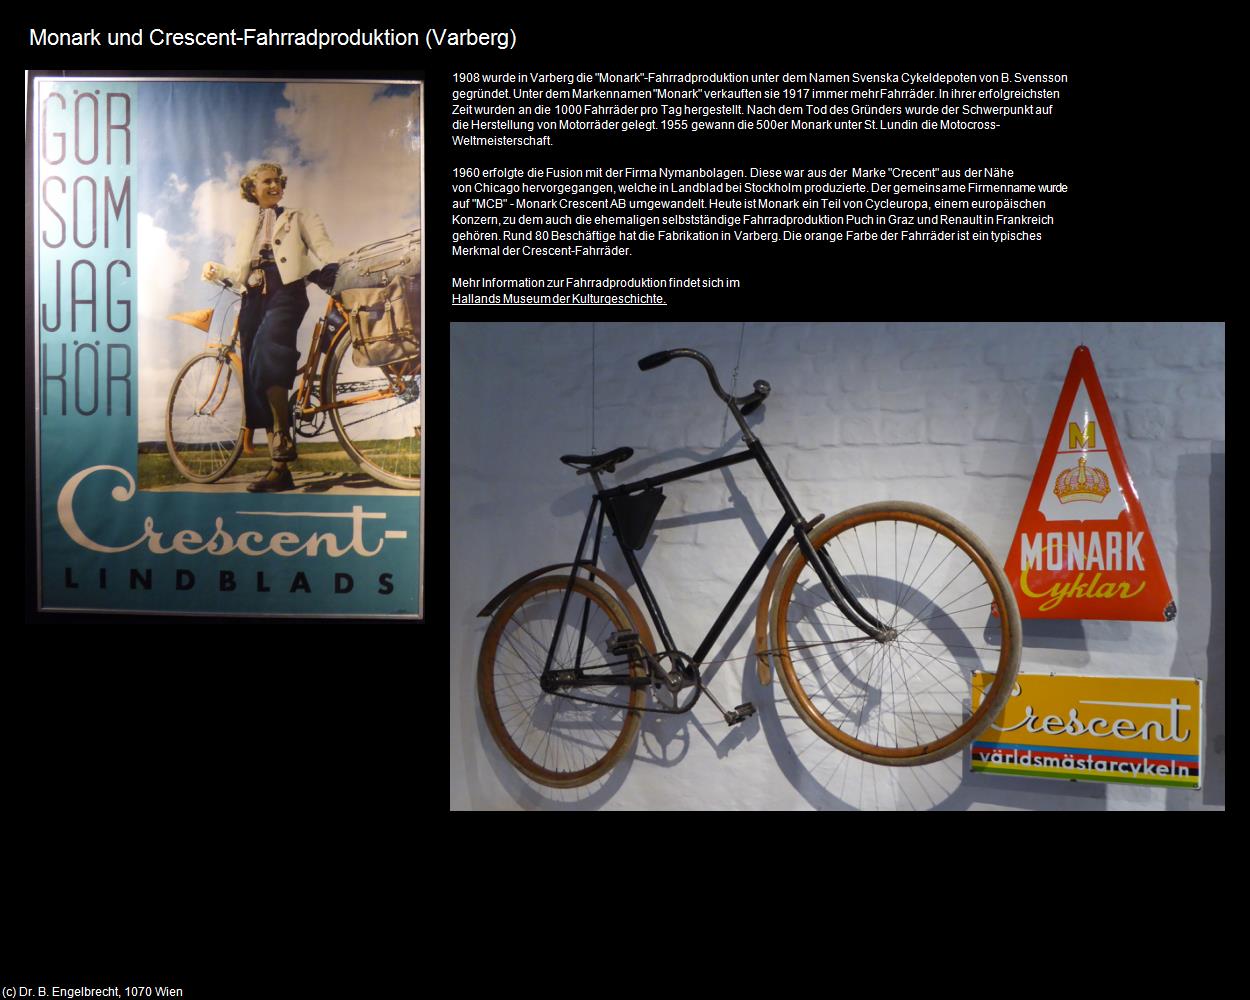 Monark und Crescent-Fahrradproduktion (Varberg) in Kulturatlas-REISE nach NORWEGEN(c)B.Engelbrecht